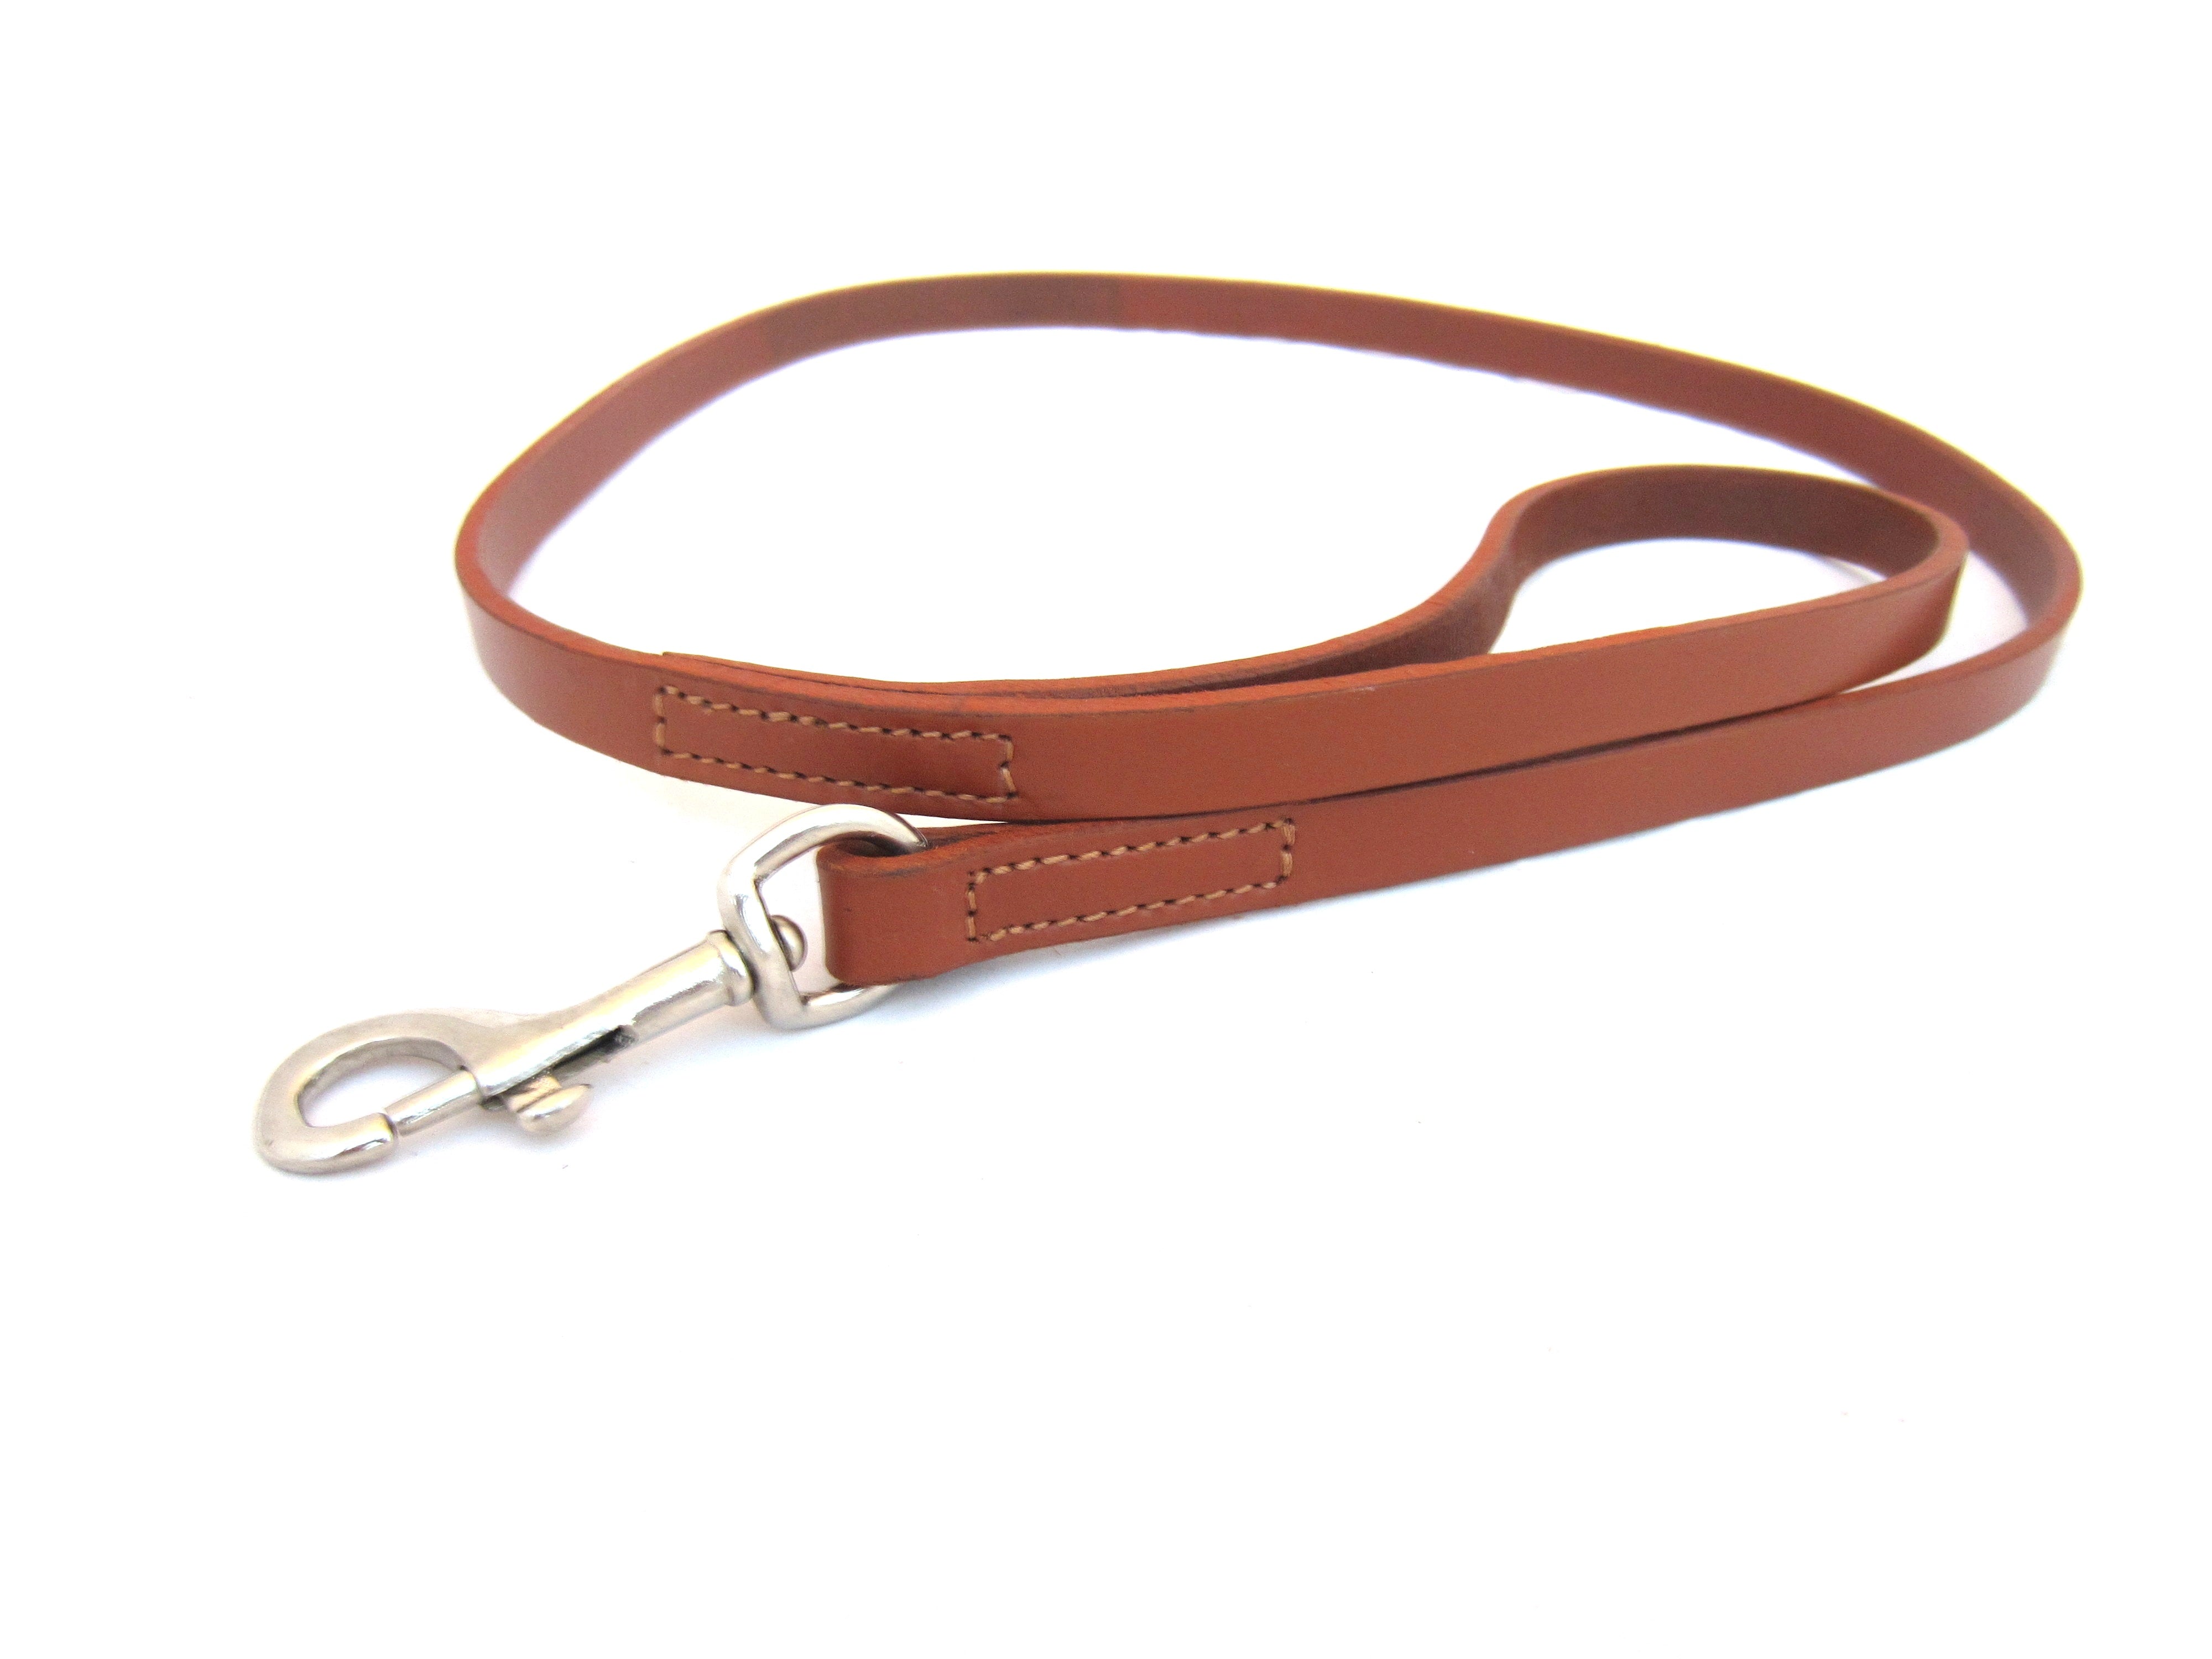 Short flat leather dog leash "Short Flat" 110 cm length